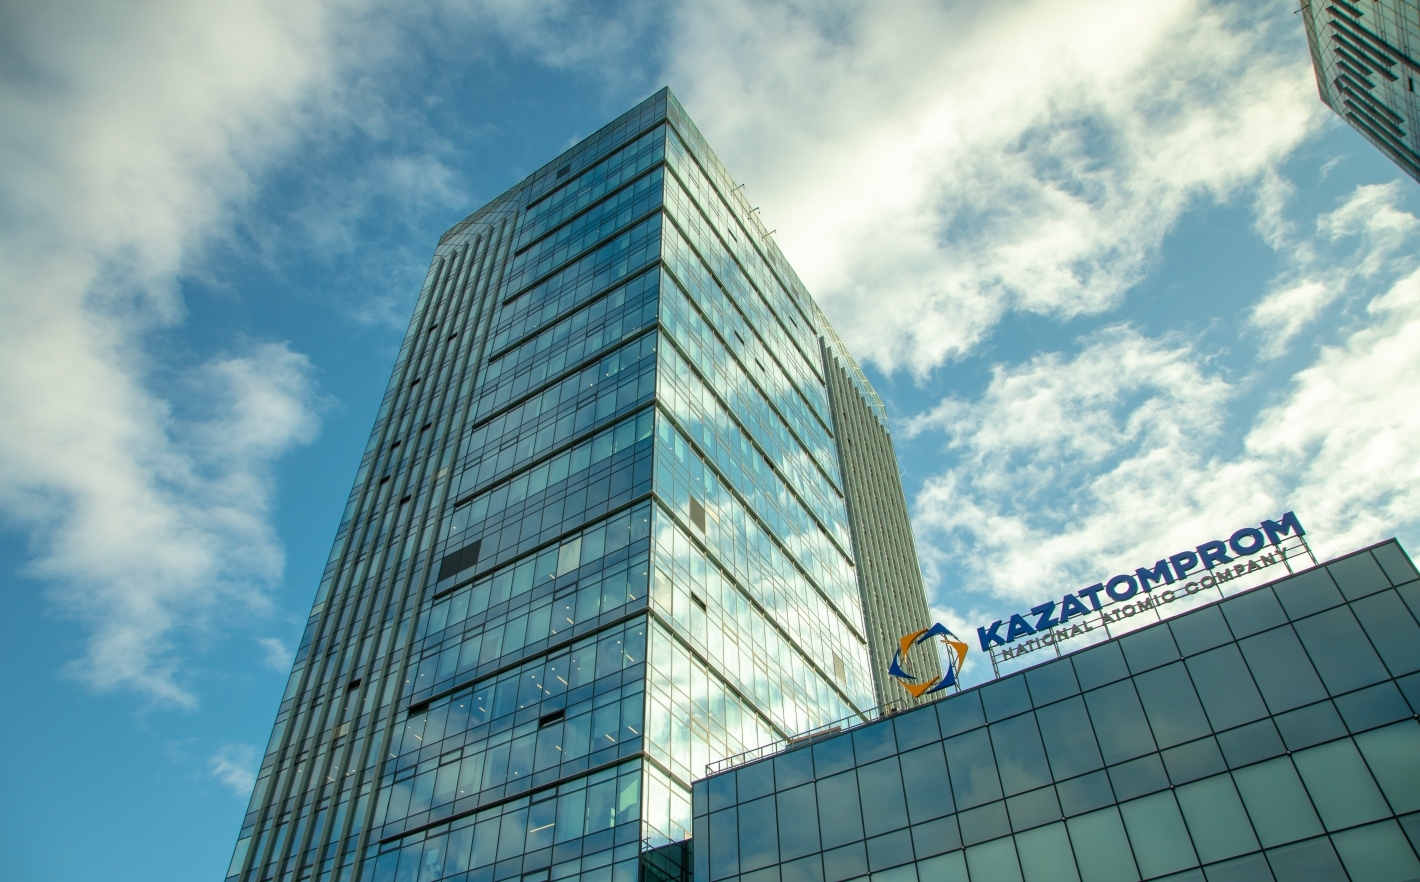 Kazatomprom announces the placement of its commercial bonds on KASE 